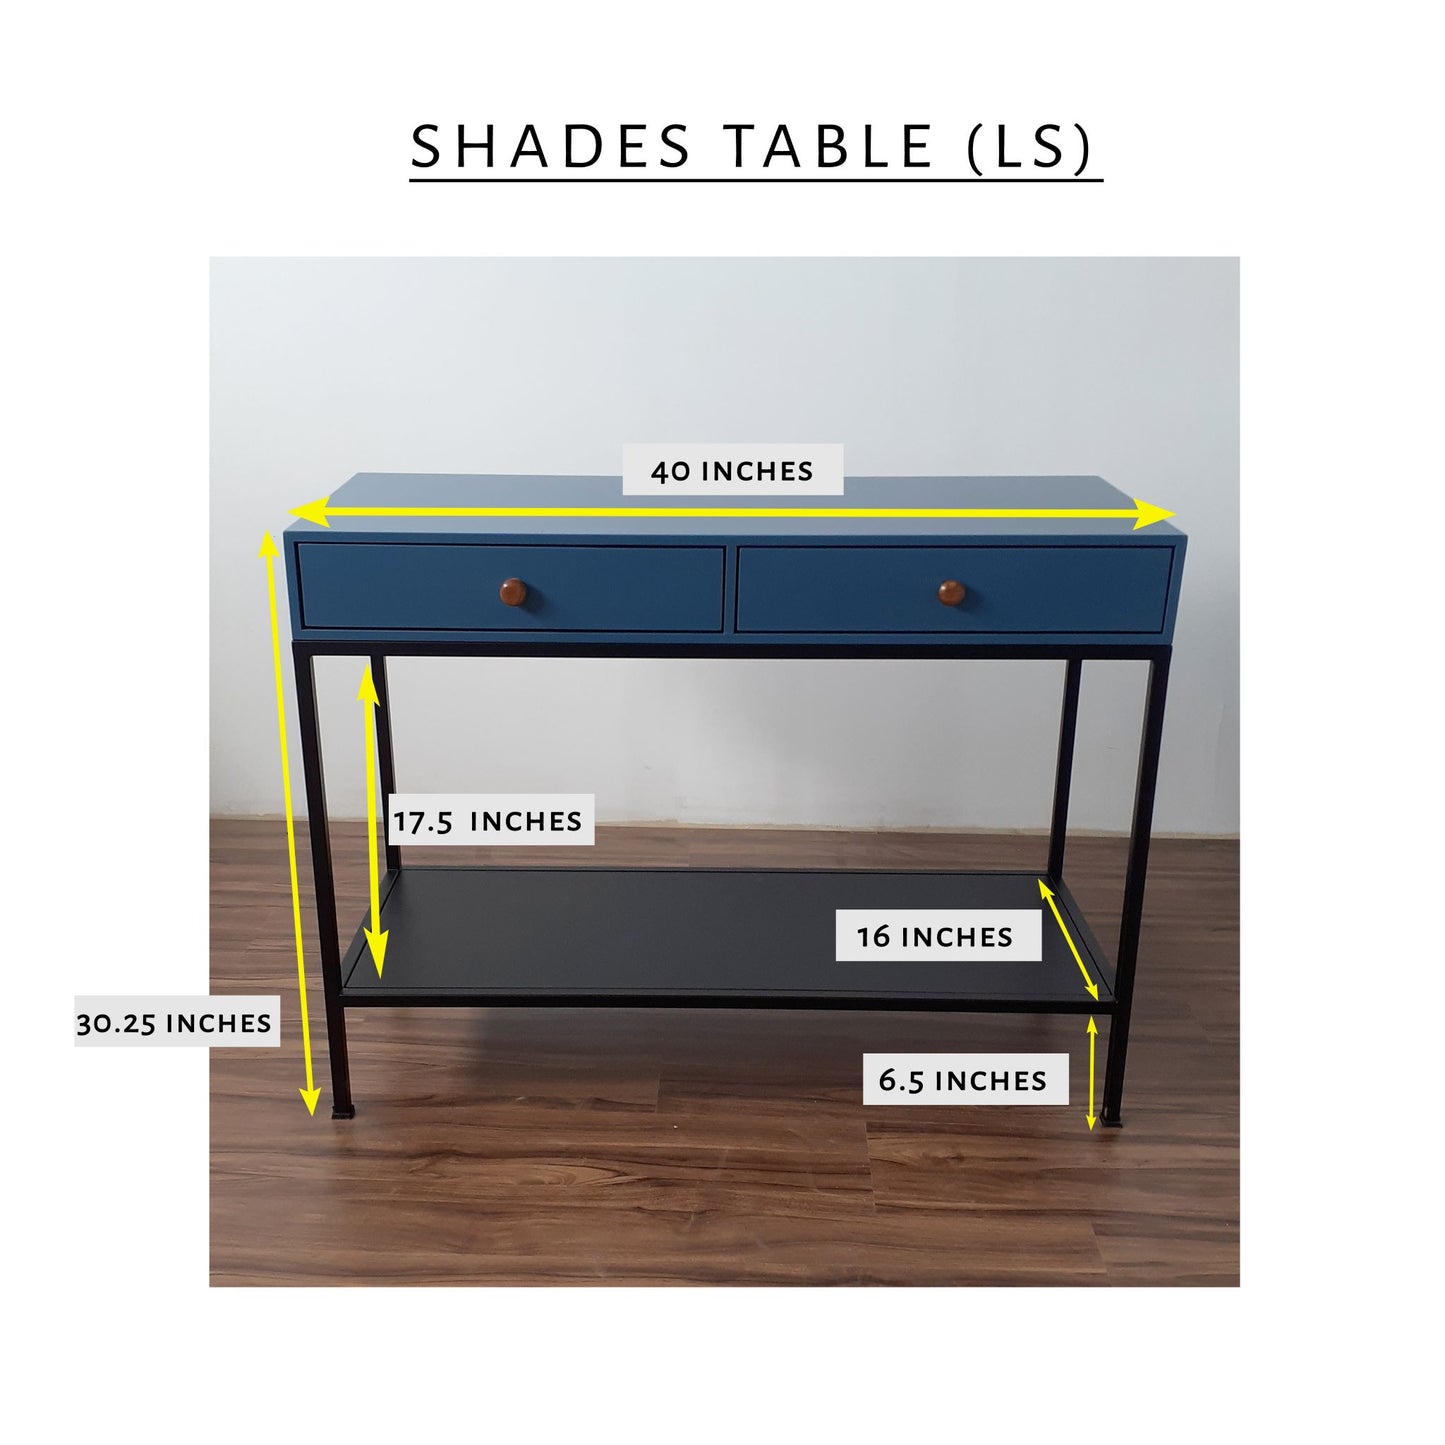 Shades Table (LS)